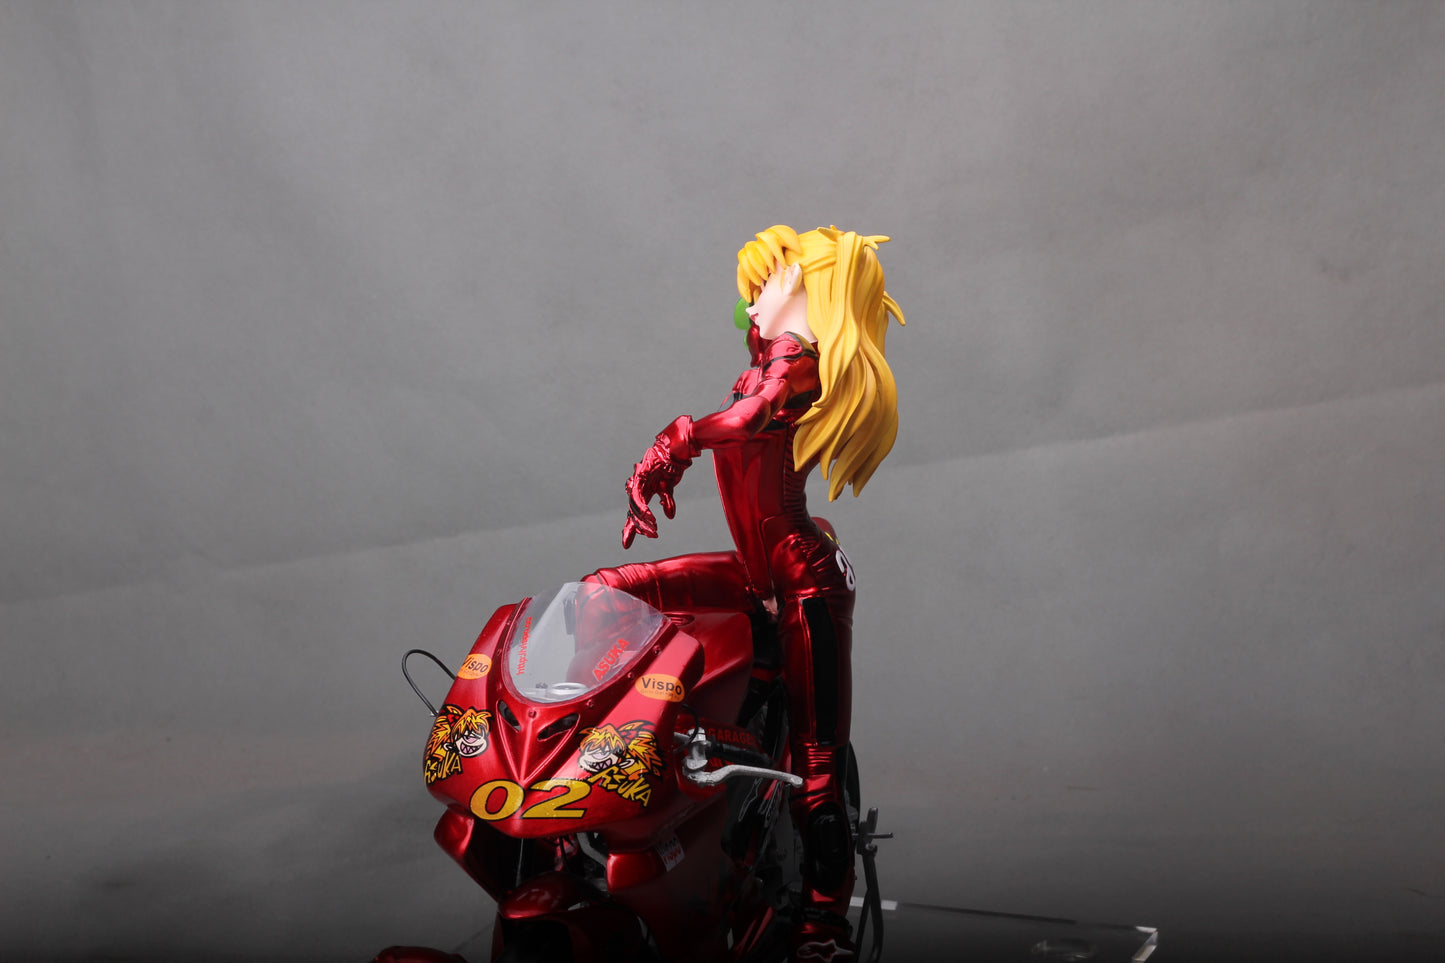 Soryu Asuka Langley with motobike 1/6 anime girl figure resin model figures